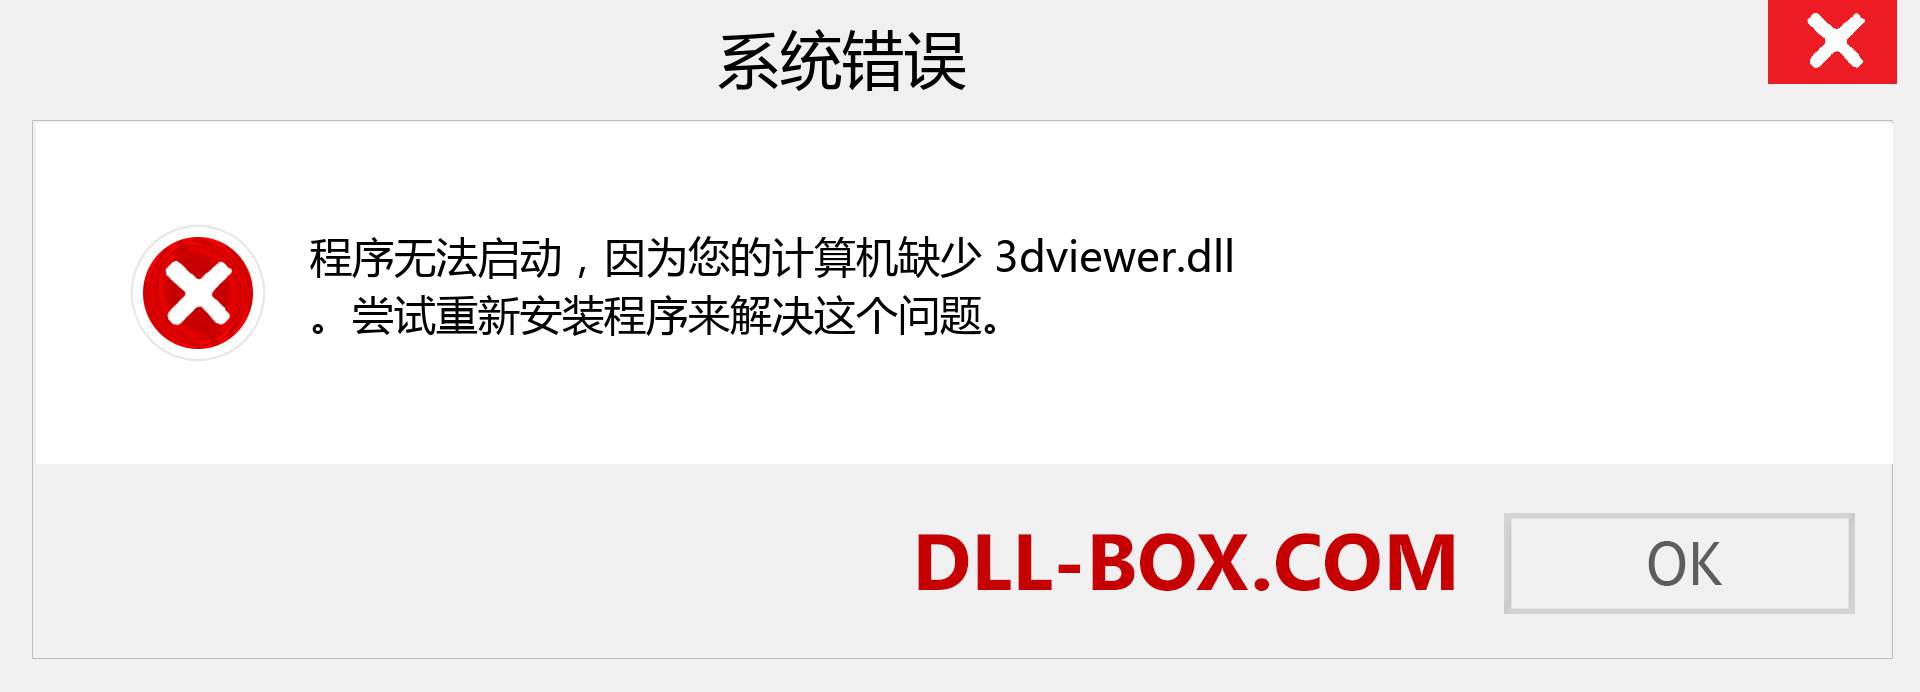 3dviewer.dll 文件丢失？。 适用于 Windows 7、8、10 的下载 - 修复 Windows、照片、图像上的 3dviewer dll 丢失错误